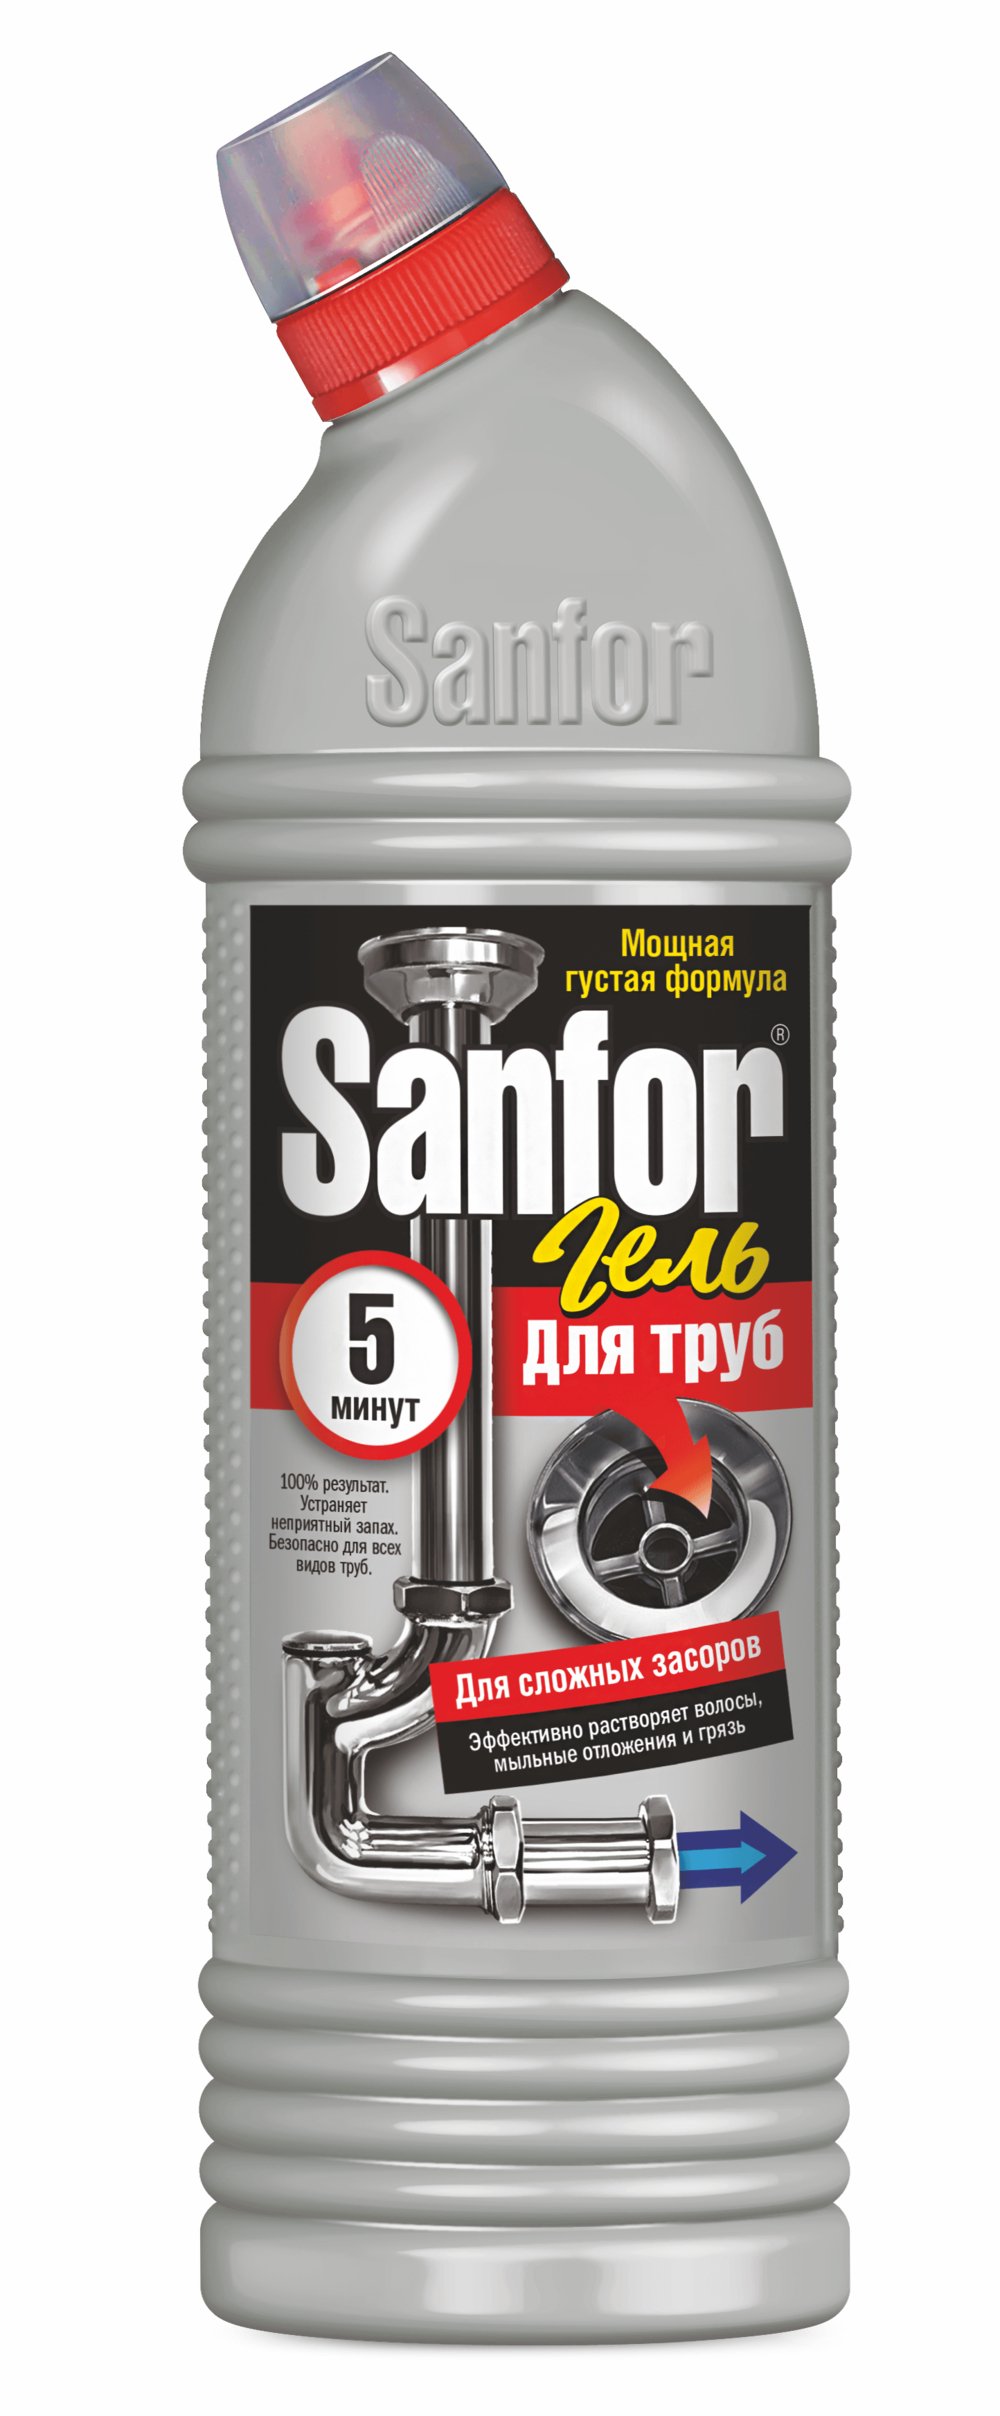 SANFOR гель, средство для прочистки канализационных труб, 5 мин, 750 мл Sanfor арт.1559 оптом_фото1